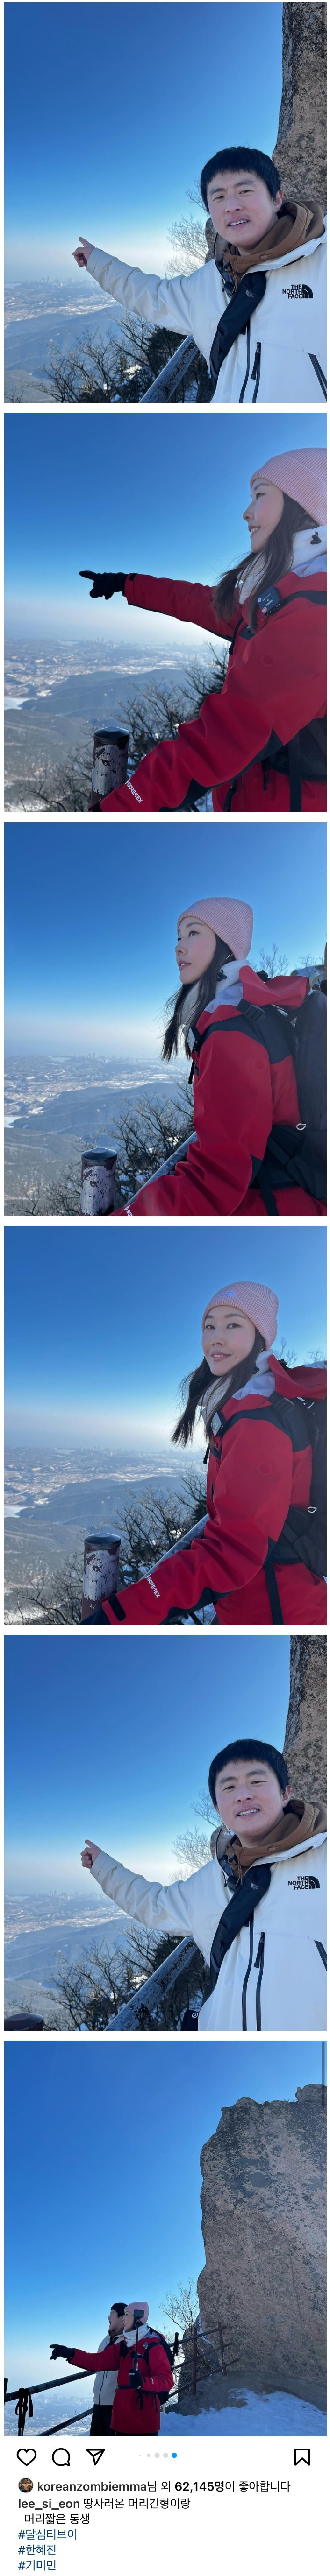 Lee Sieon Climbing with Gian84 Han Hye-jin